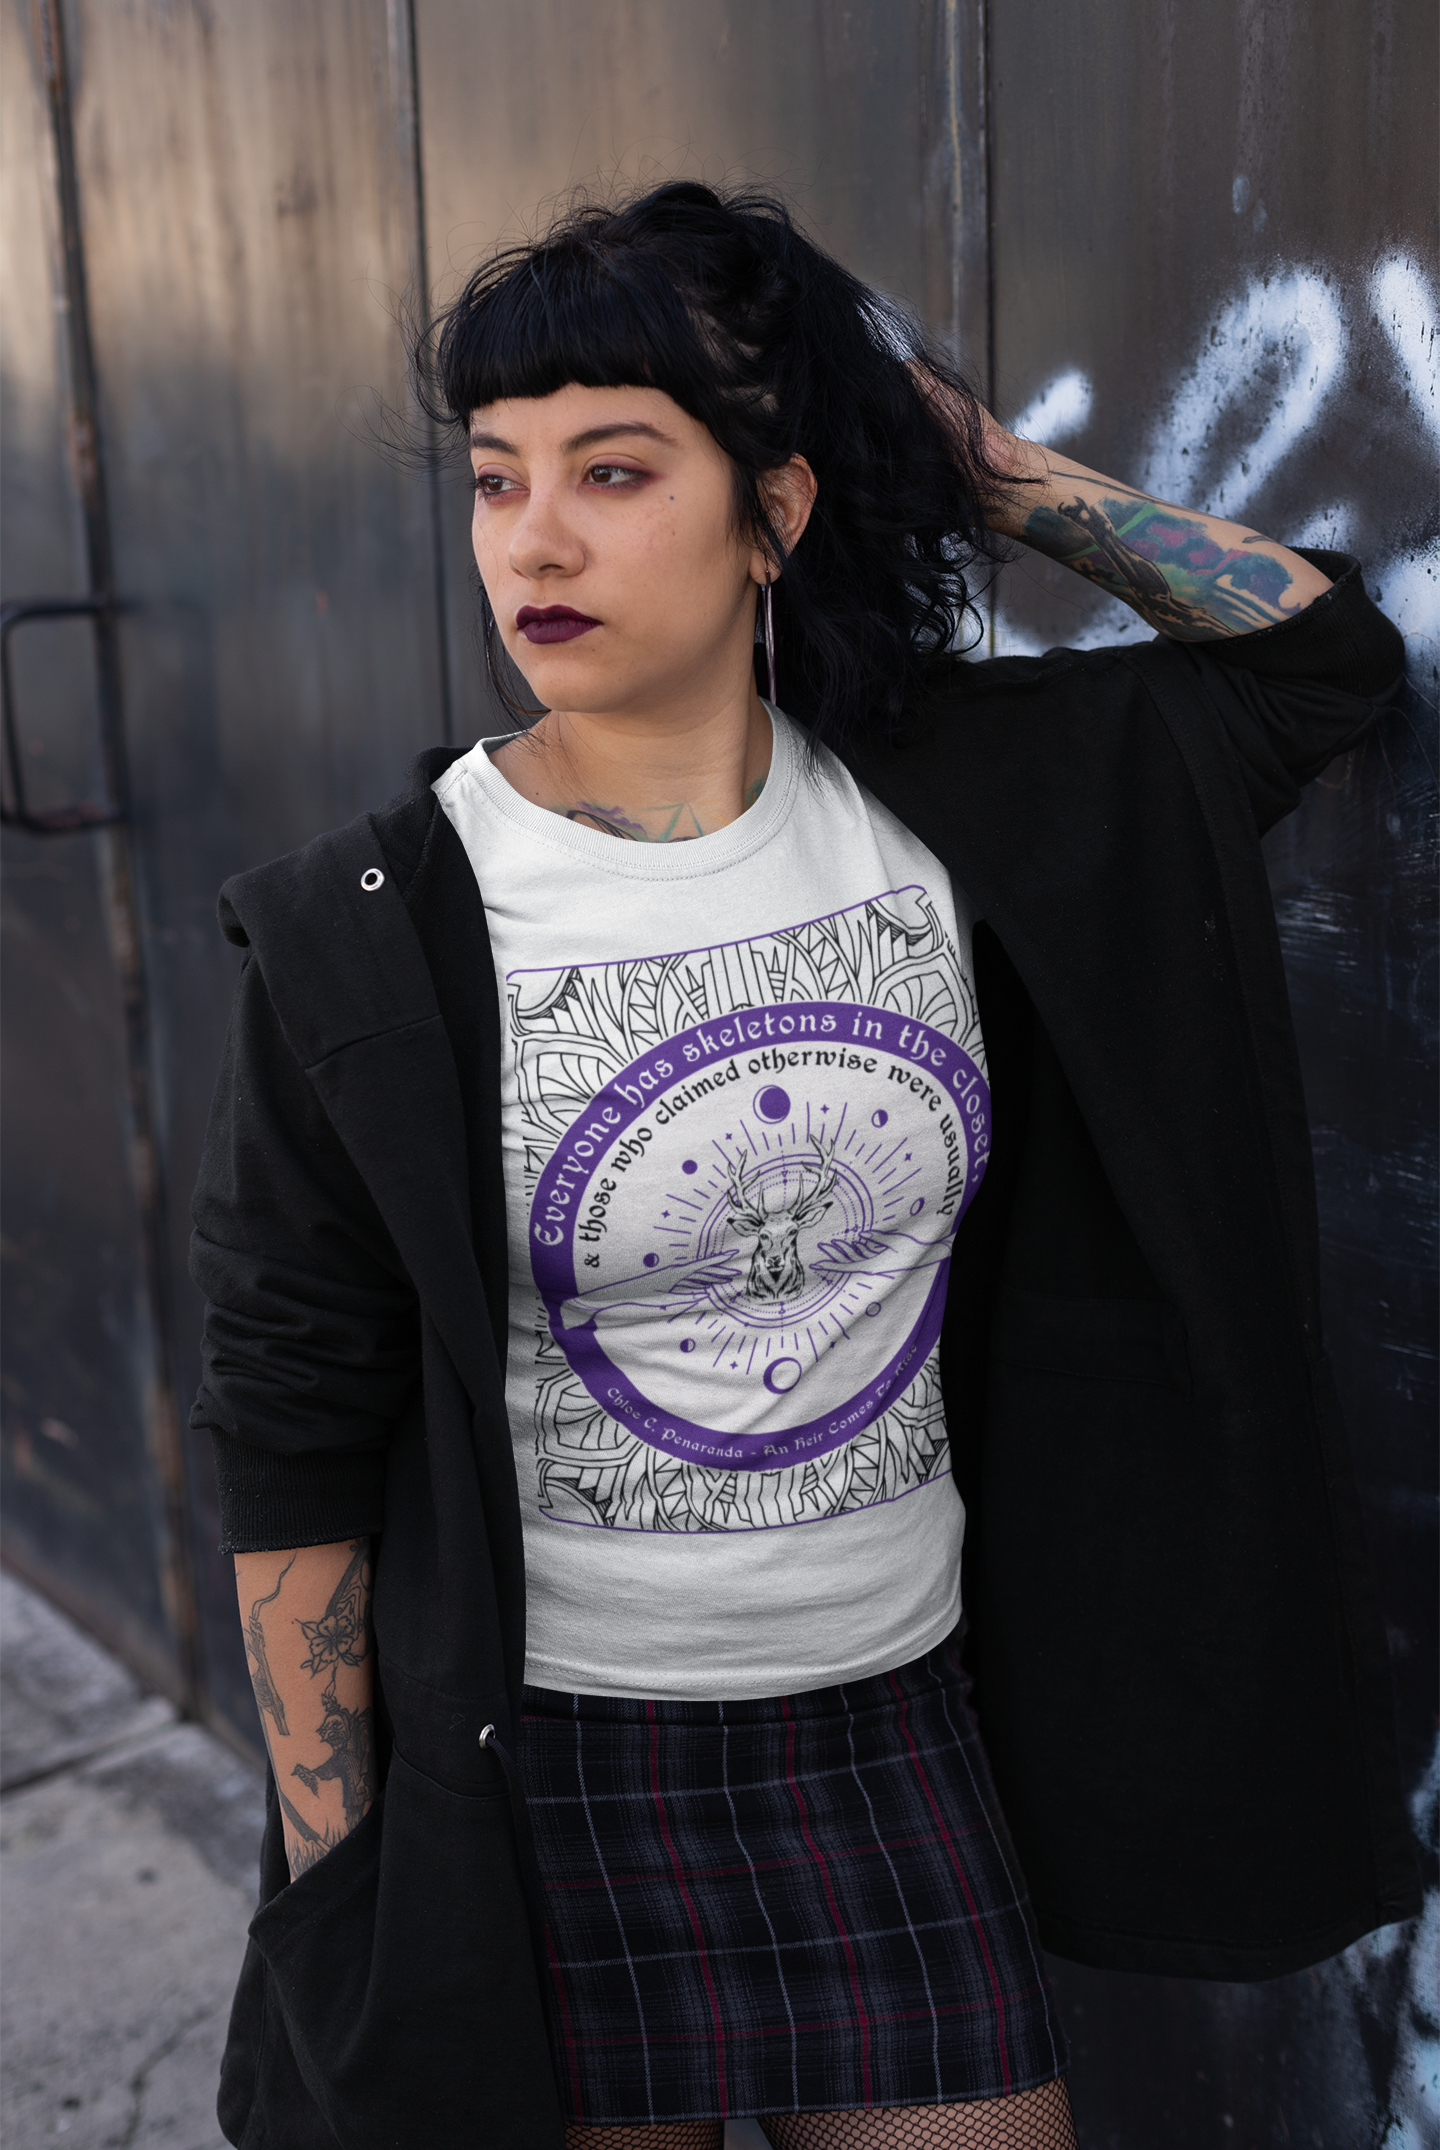 Everyone has Skeletons in the Closet - Chloe C. Penaranda - Officially Licensed -Sweatshirt - An Heir Comes to Rise - AHCTR